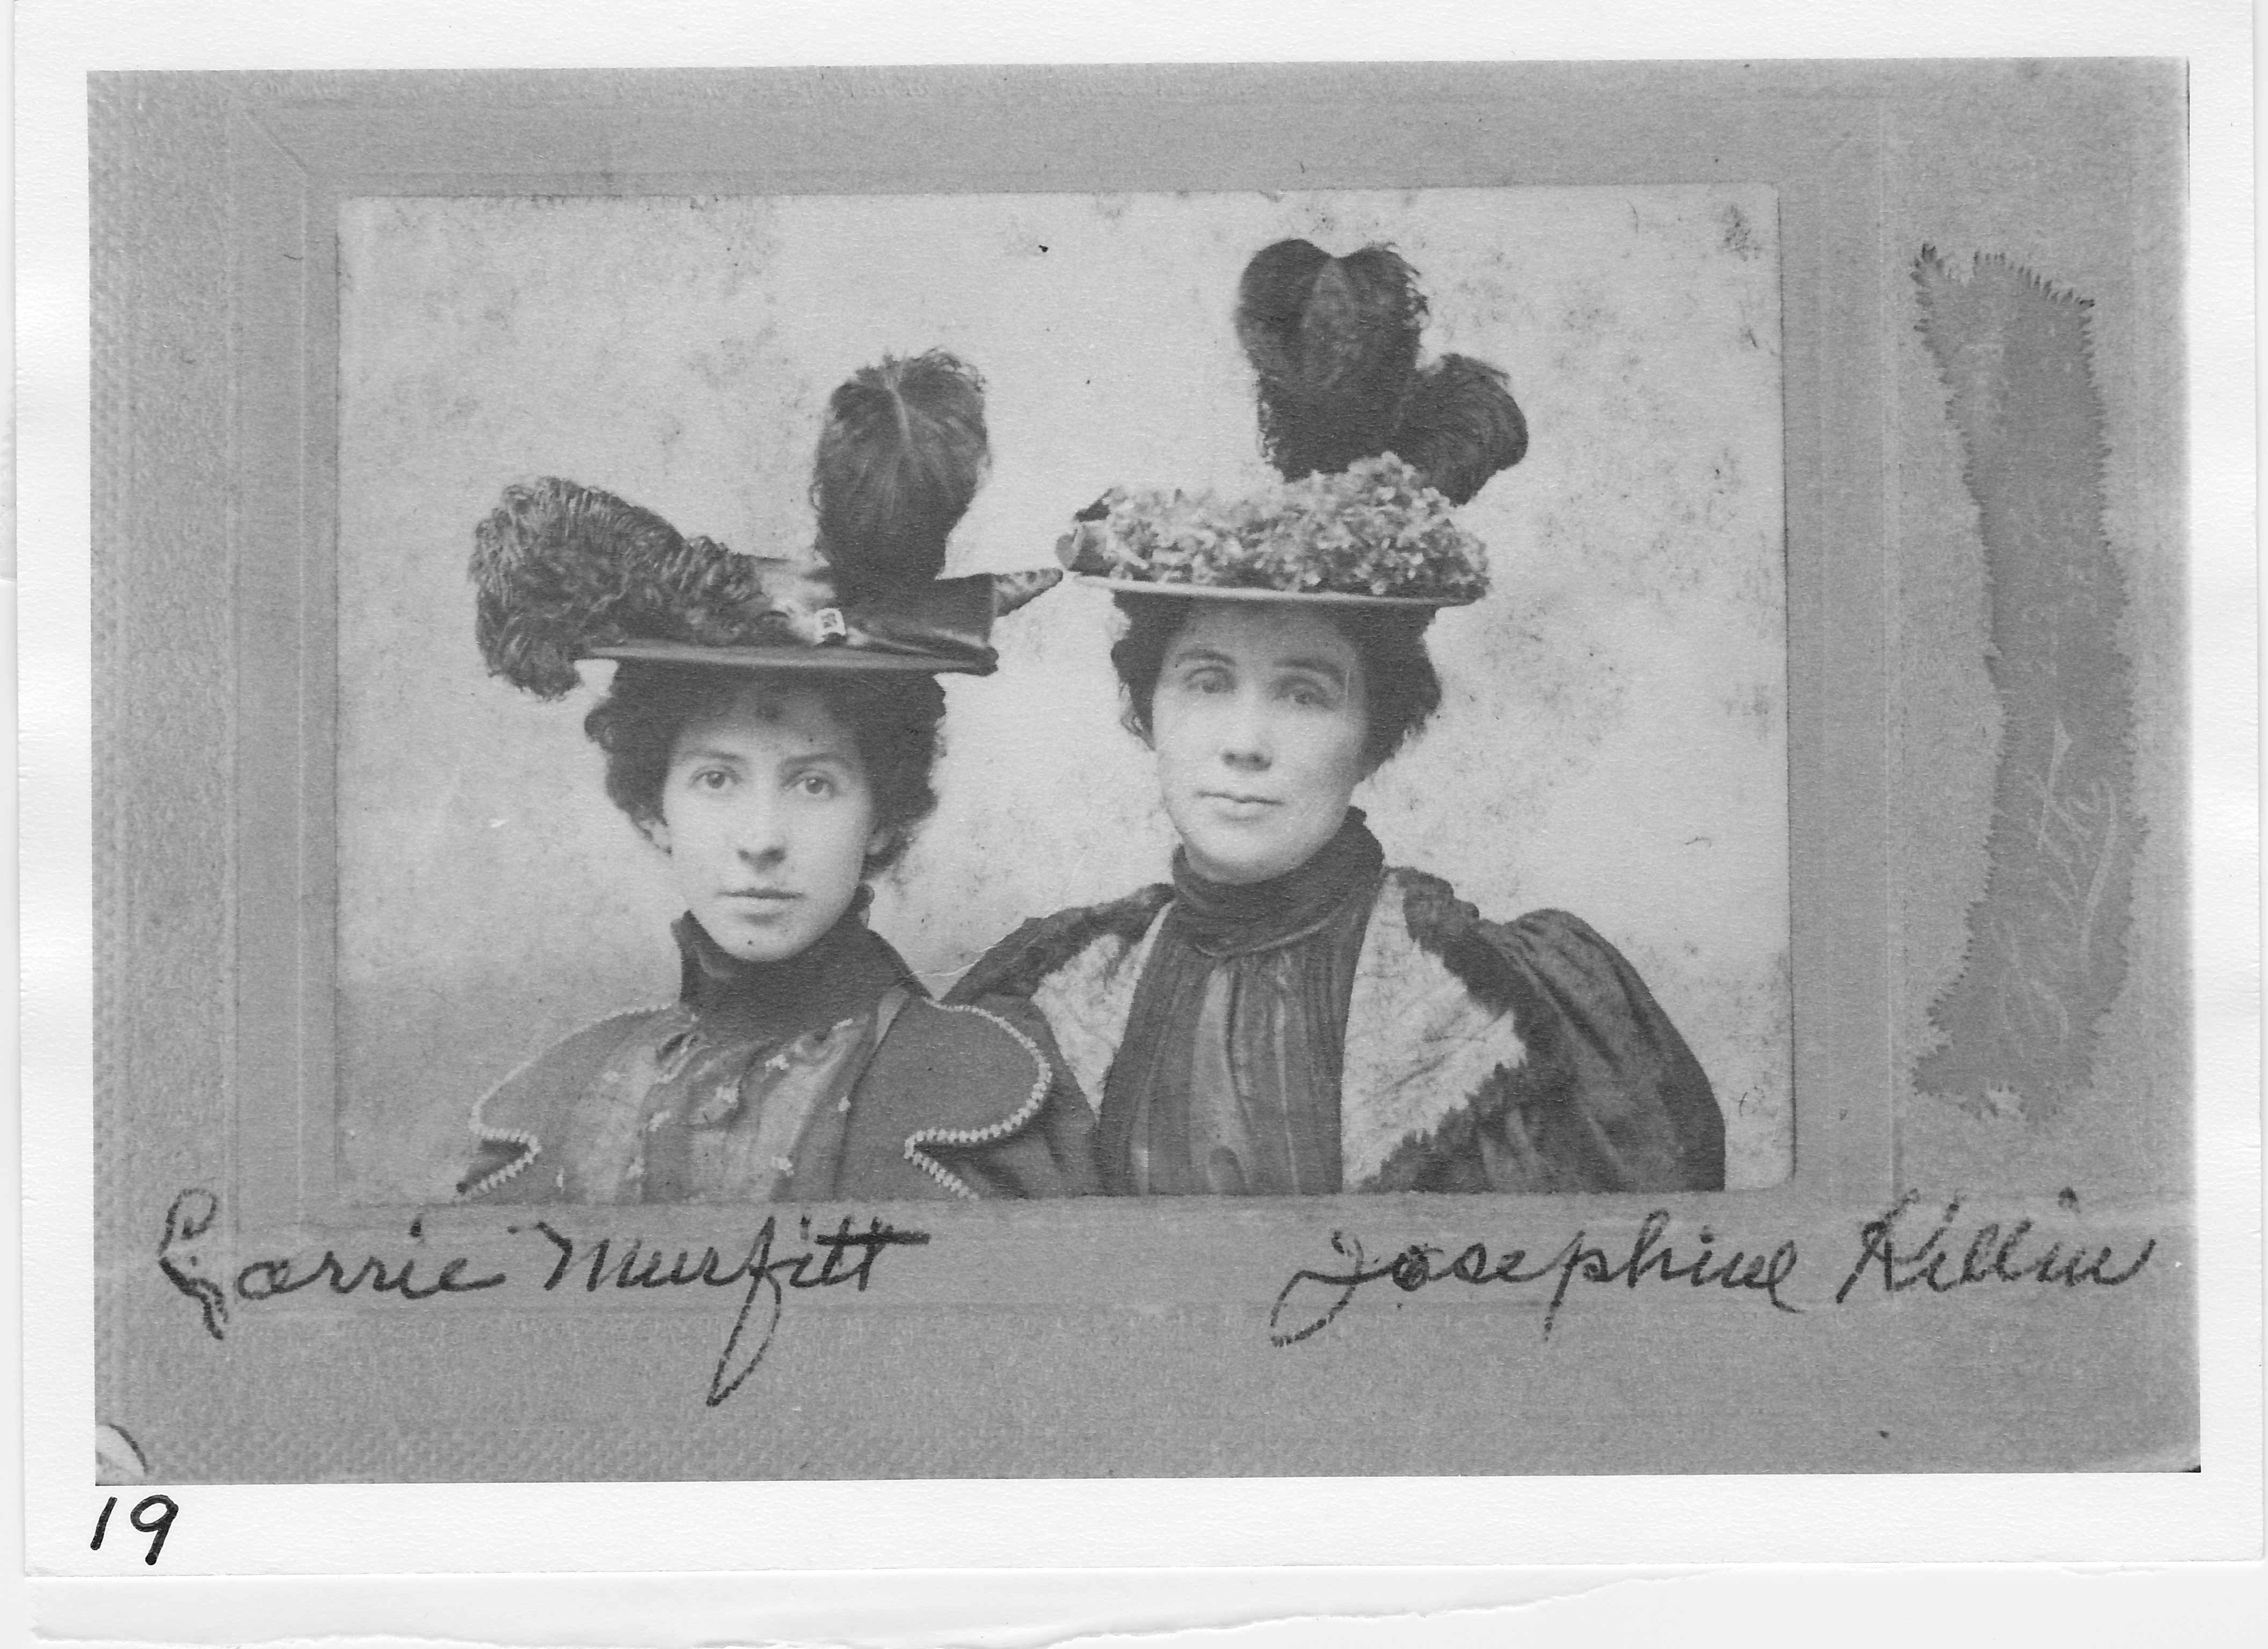 Carrie Murfitt and Josephine Killin of the Killin Hat Shop.